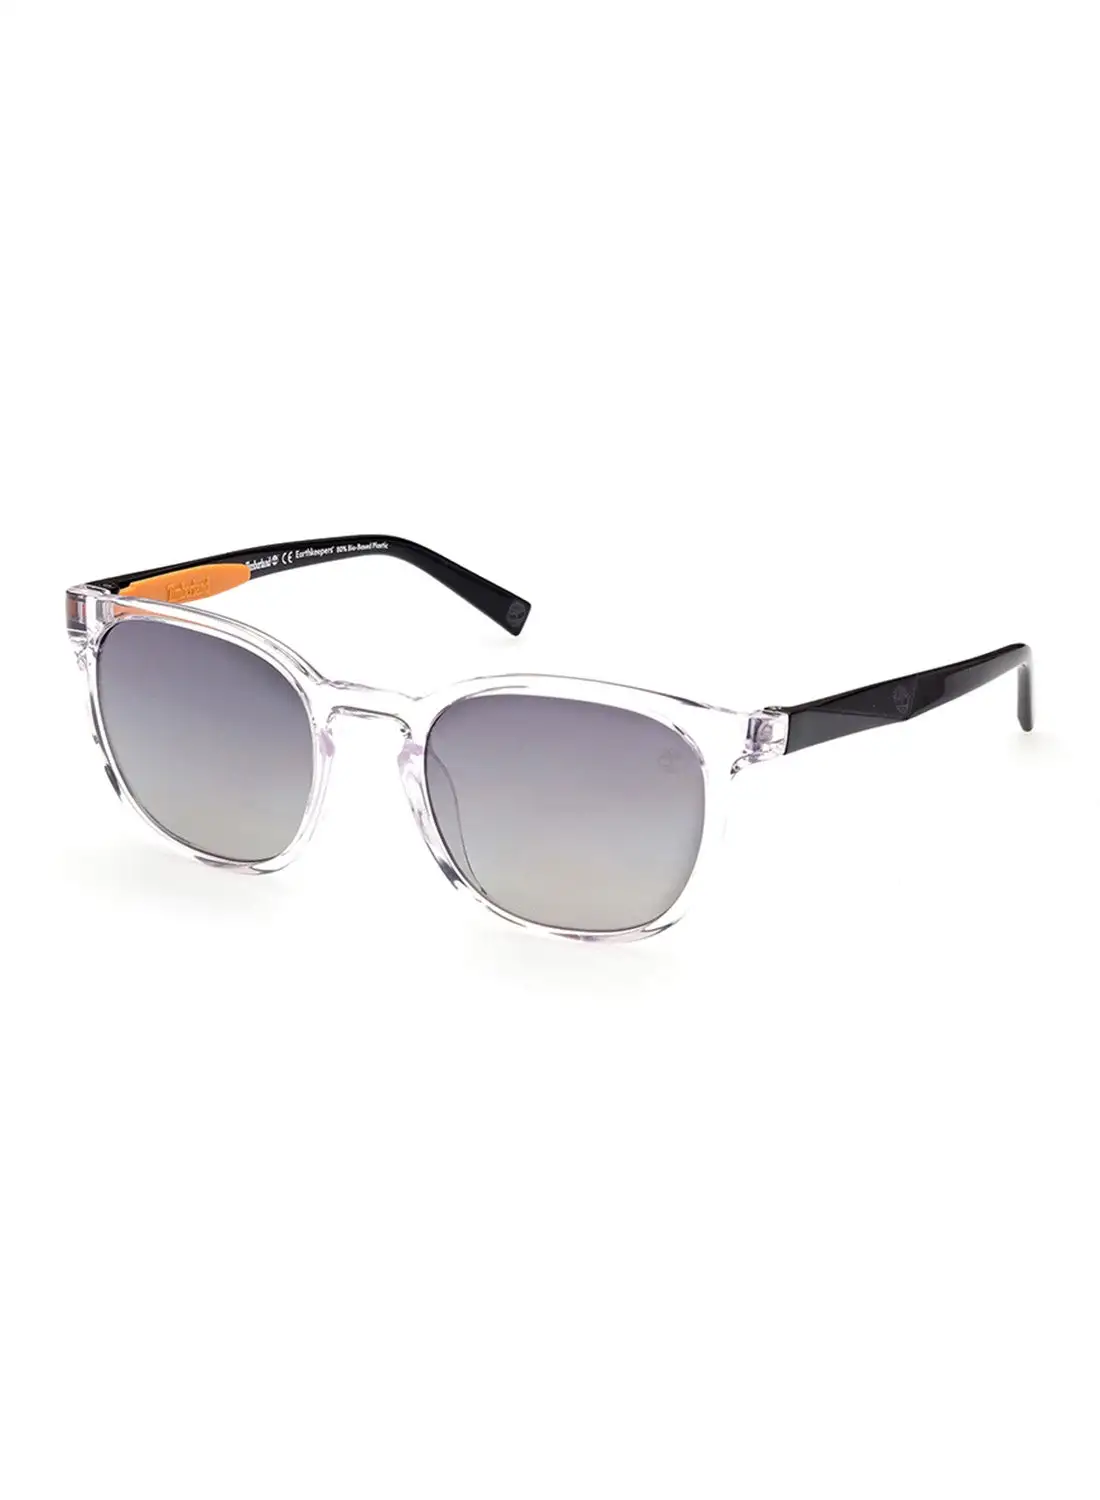 Timberland Men's Polarized Round Shape Sunglasses - TB927426D53 - Lens Size: 53 Mm